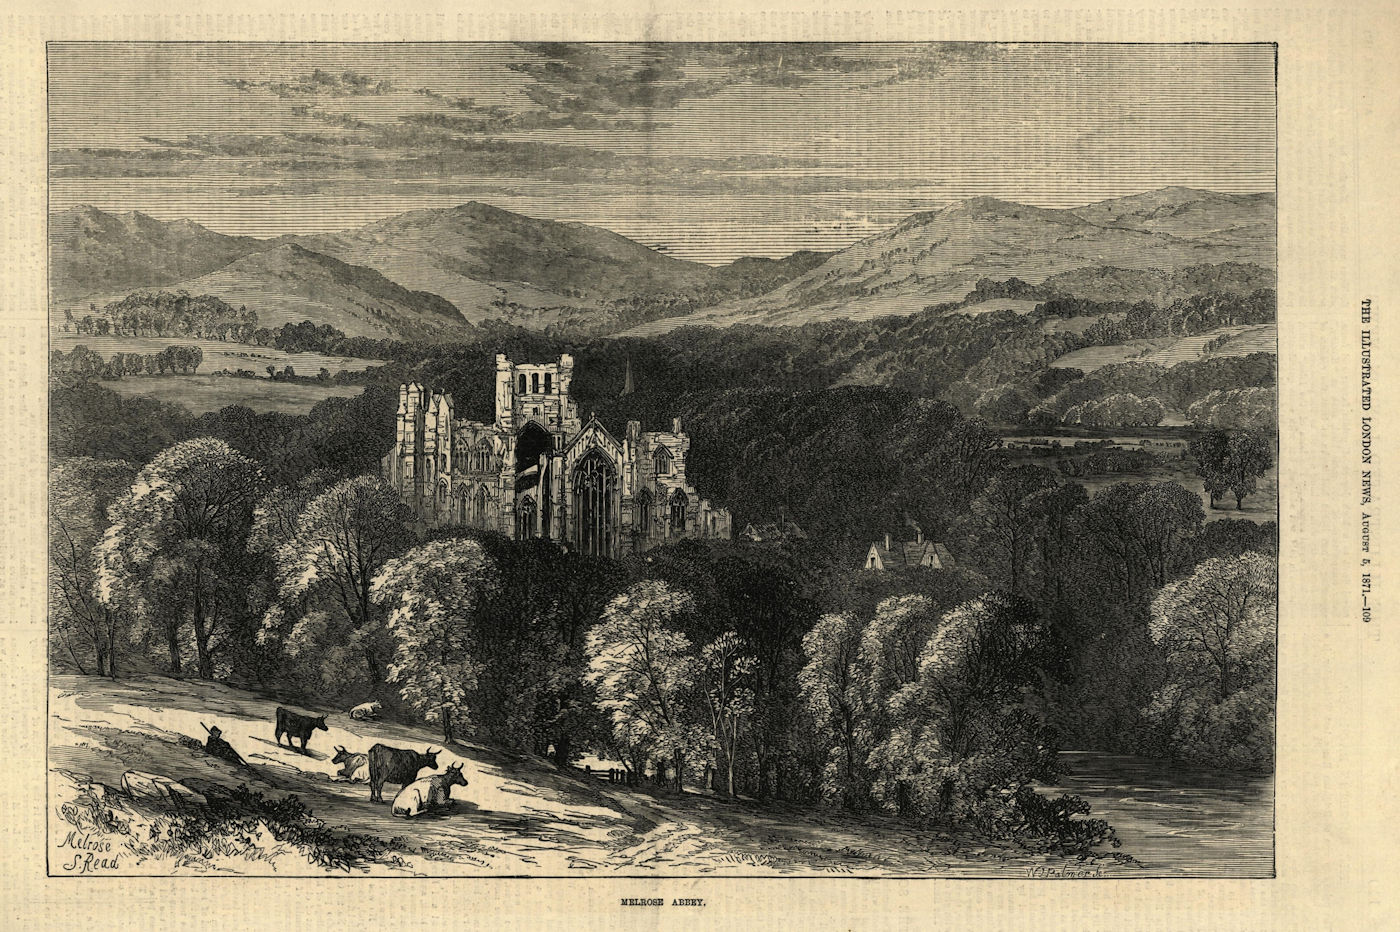 Associate Product Melrose Abbey. Scotland. Churches 1871 old antique vintage print picture